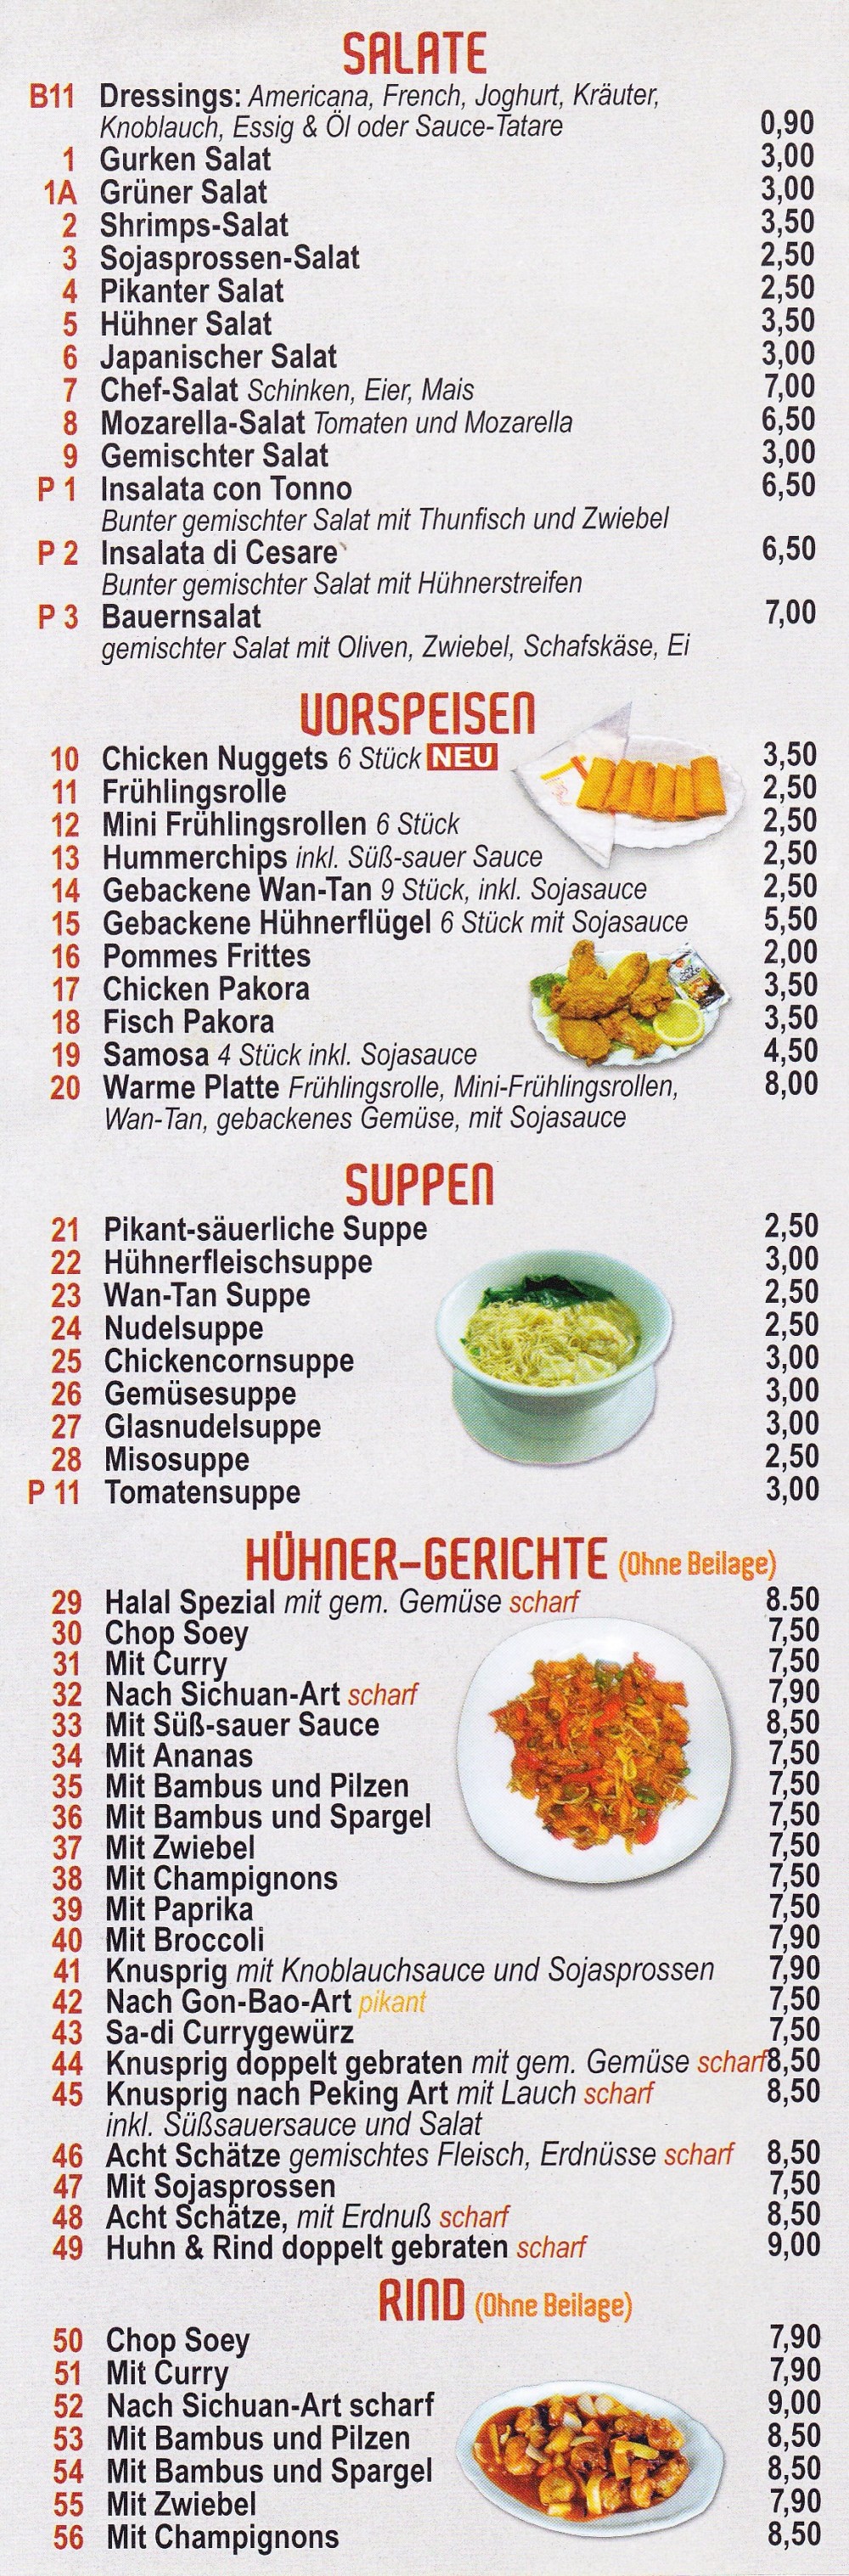 Halal Food Flyer Seite 2 - Halal Food - Wien